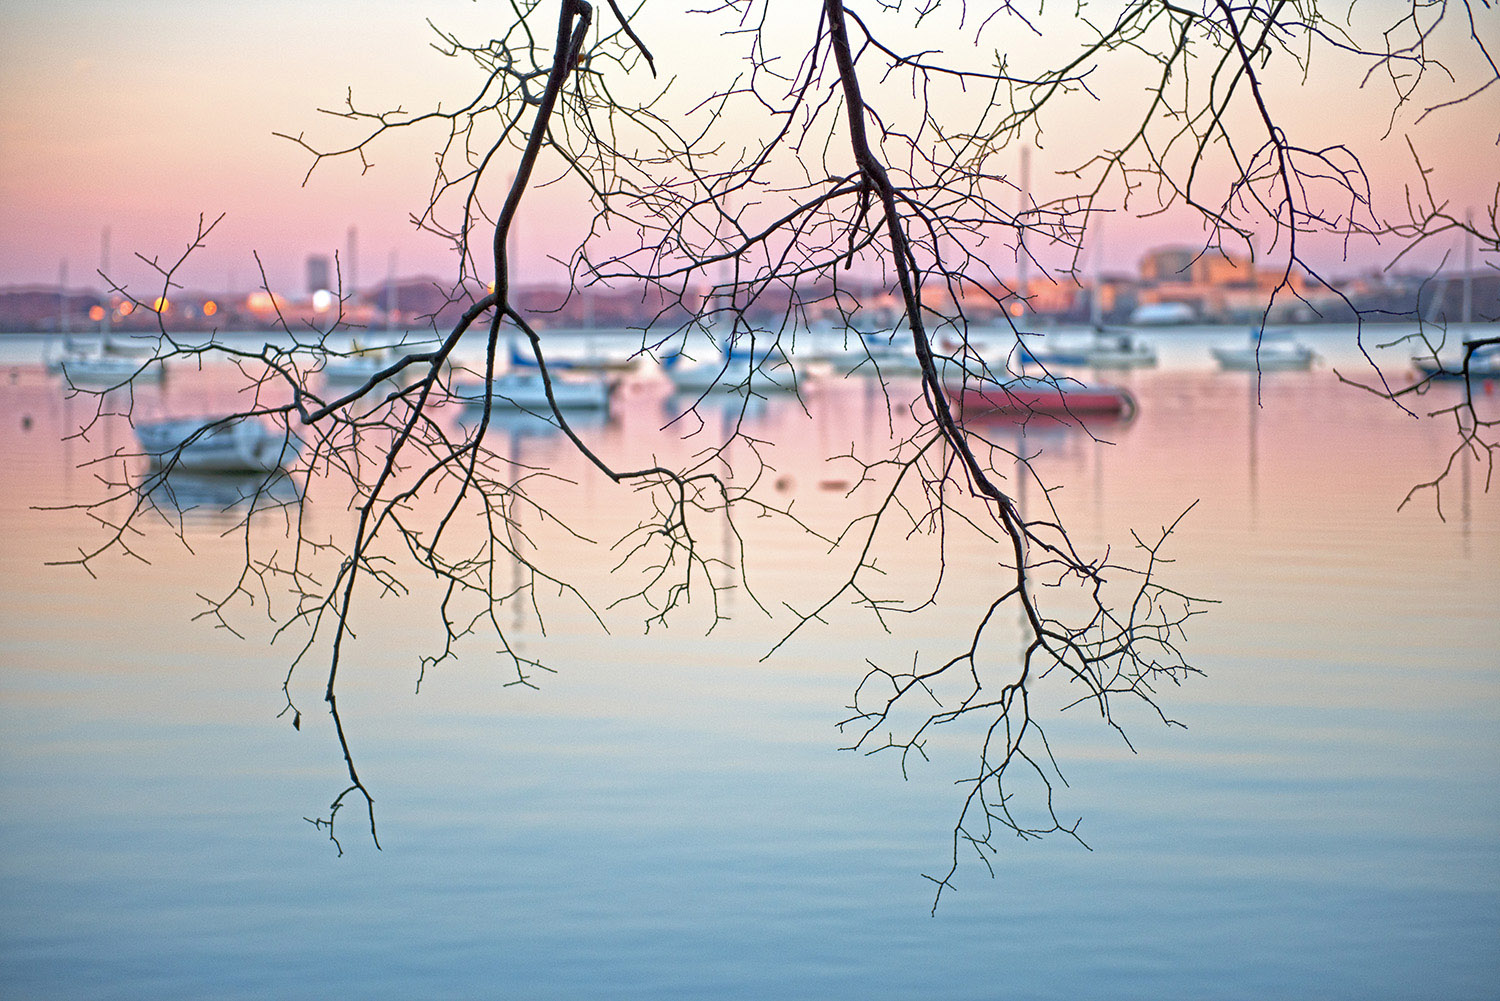 Marina_Sunset_Dusk_Sailboats_Potomac_River_Tree_Branch_Rosey.jpg